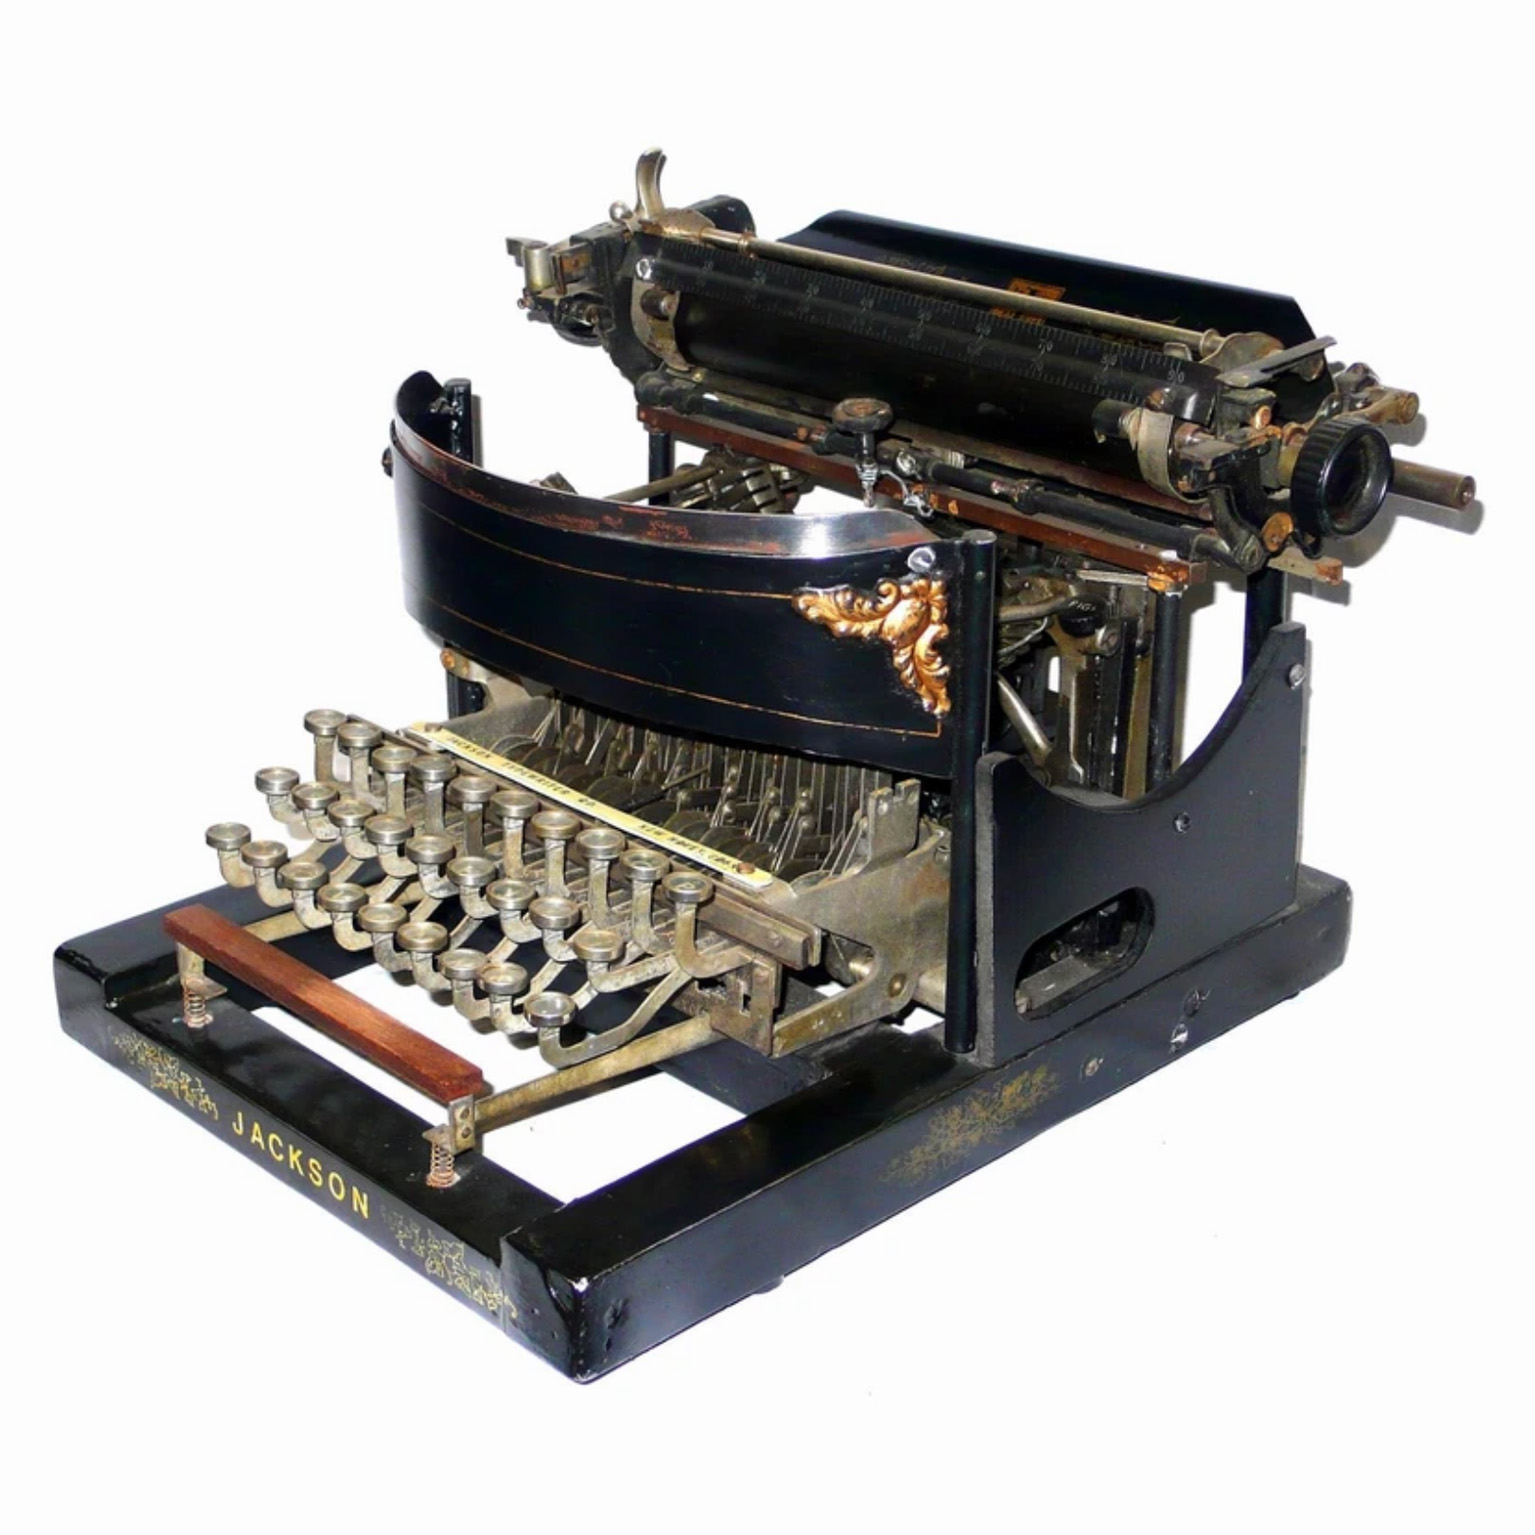 The Jackson Type II collectable typewriter